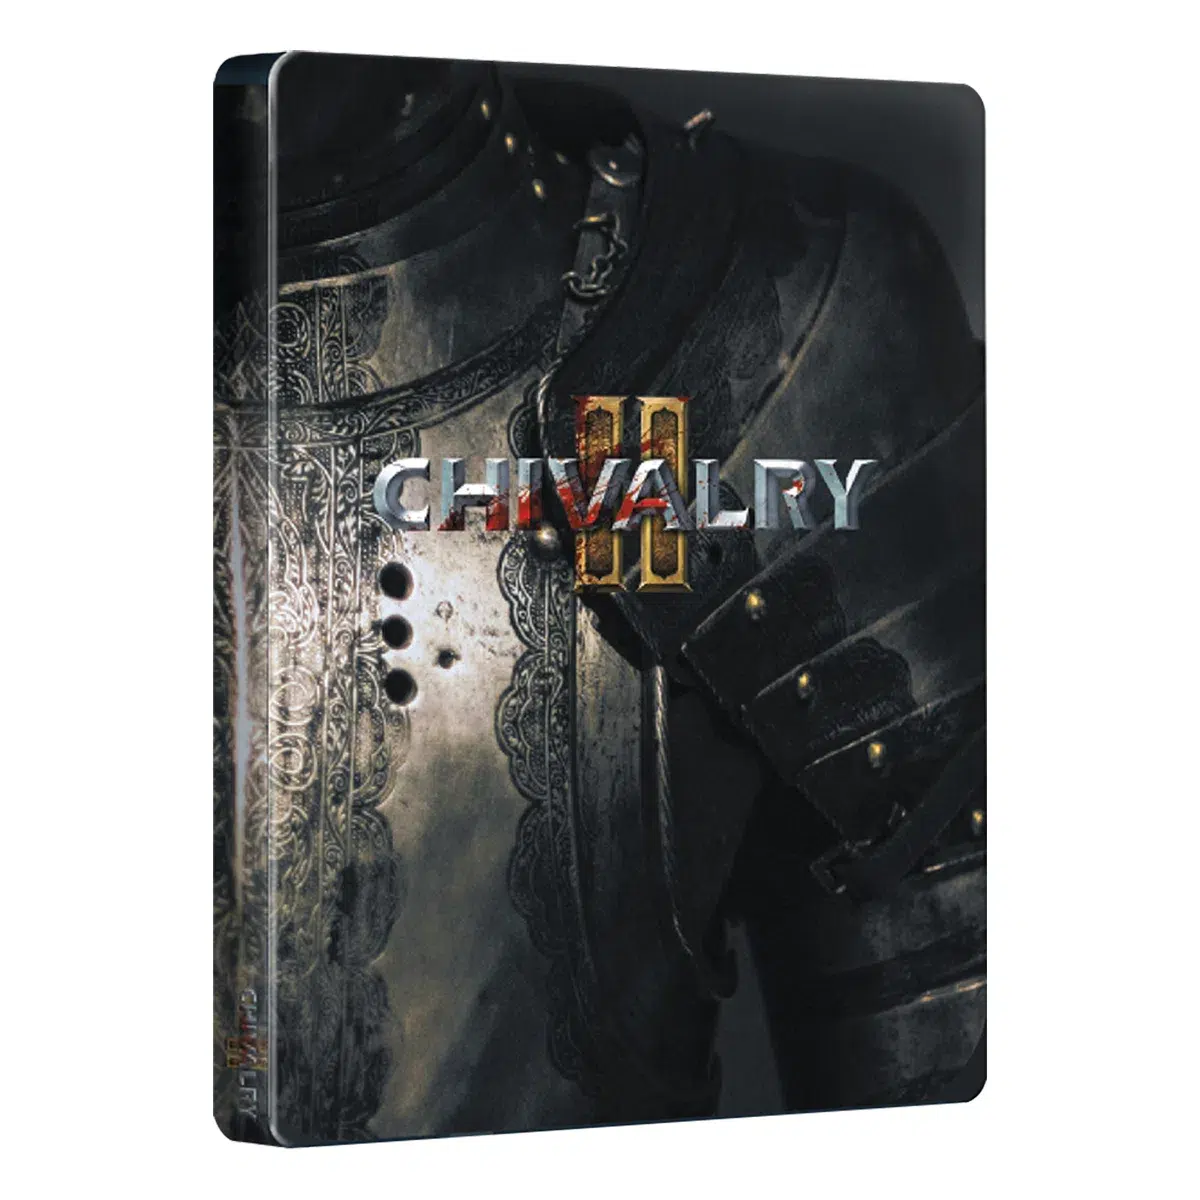 Chivalry 2 Steelbook Edition (PS4)